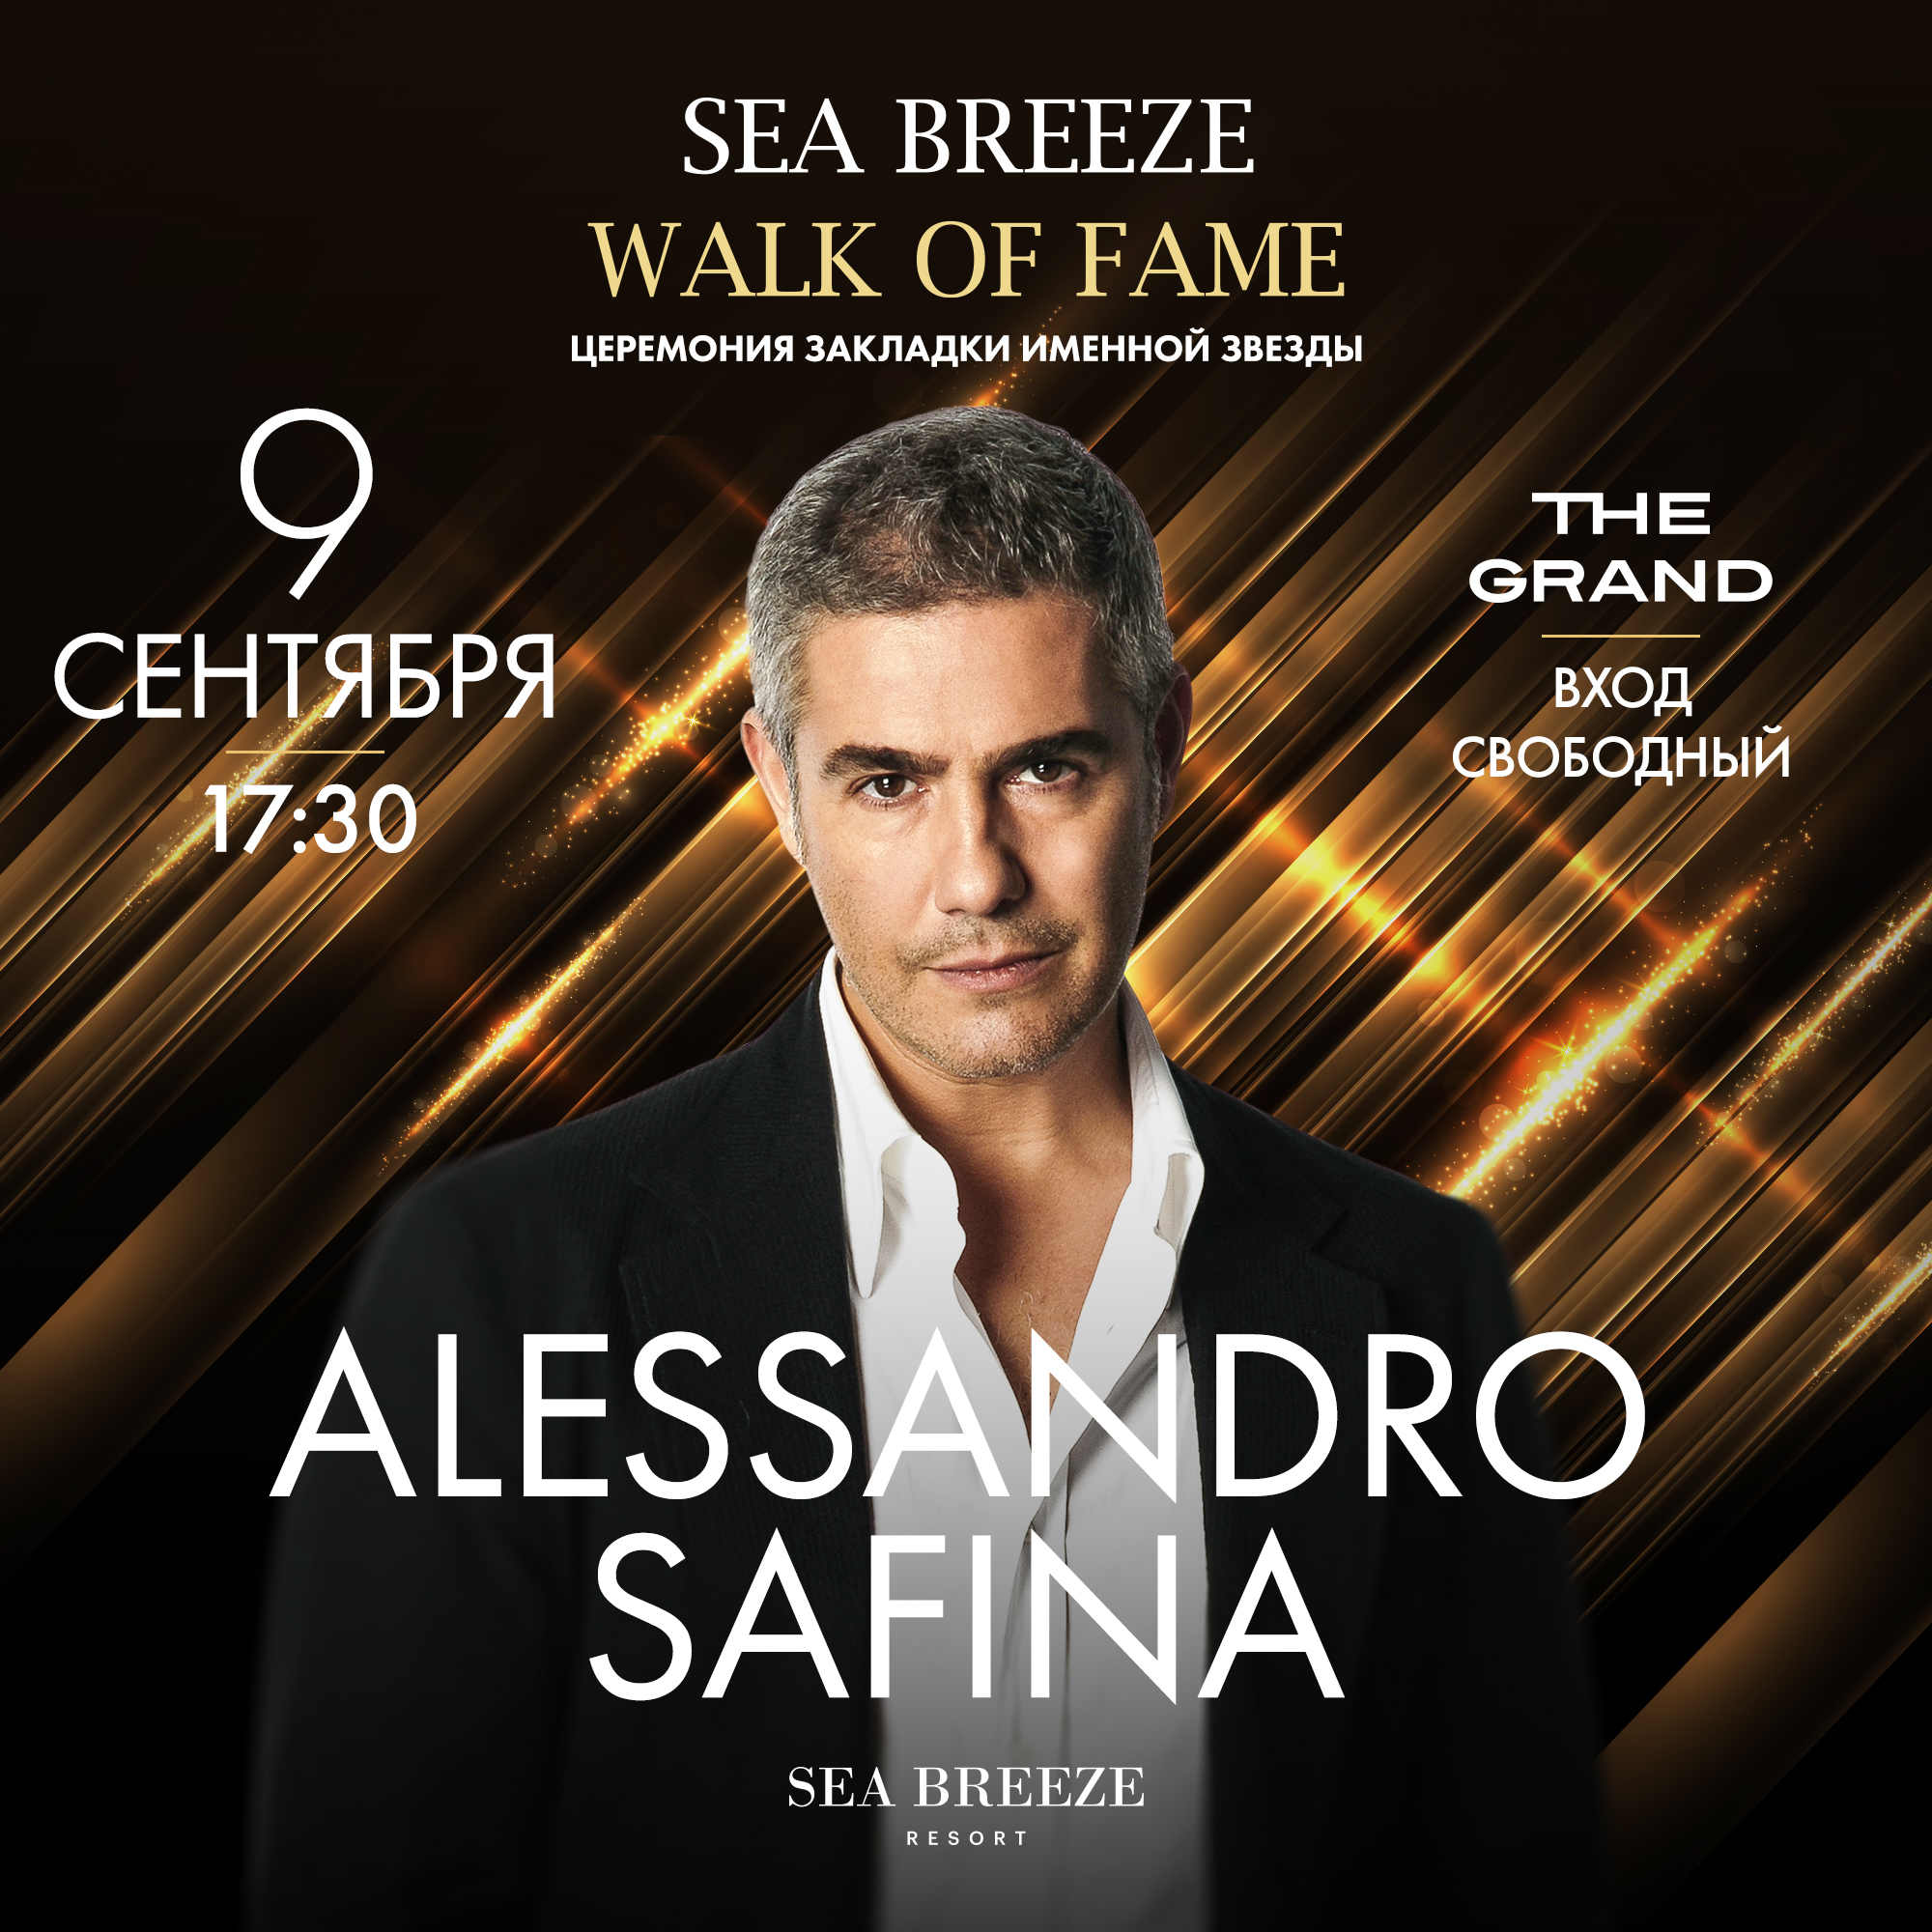 On 9 September, Sea Breeze Resort will host the ceremony of star openin of the world famous Italian tenor Alessandro Safina